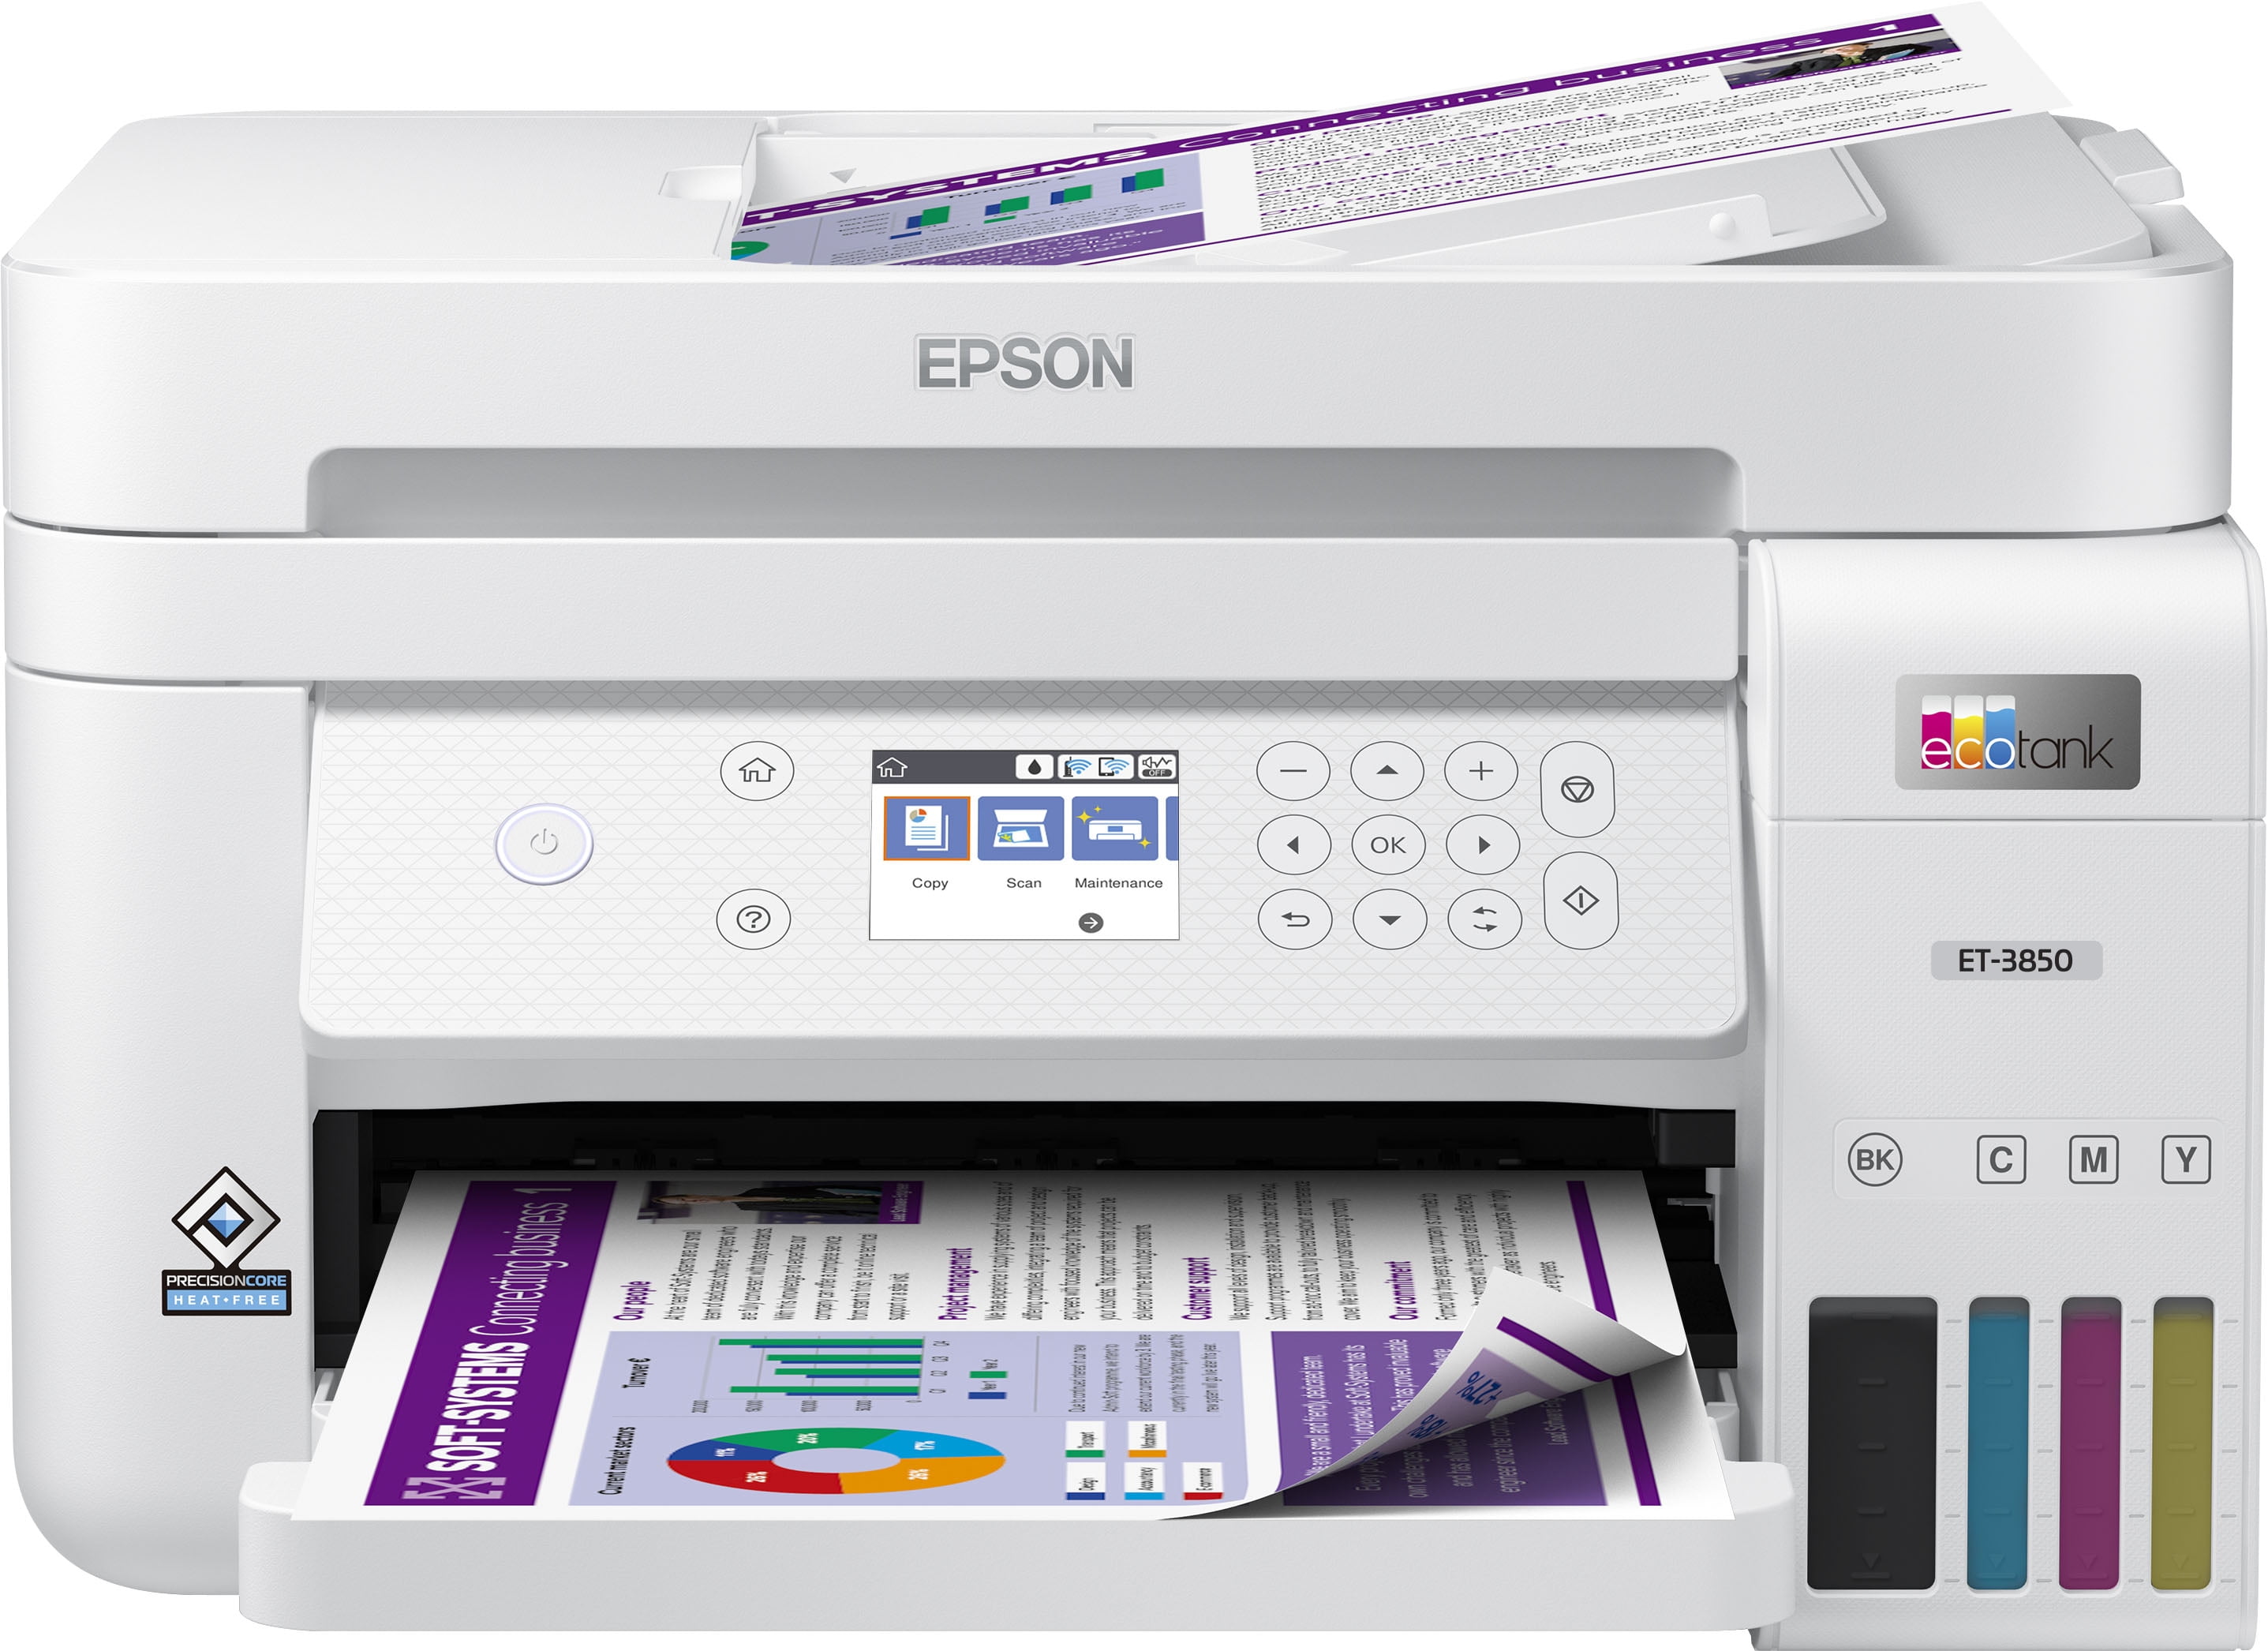 New Epson EcoTank ET-3850 - electronics - by owner - sale - craigslist